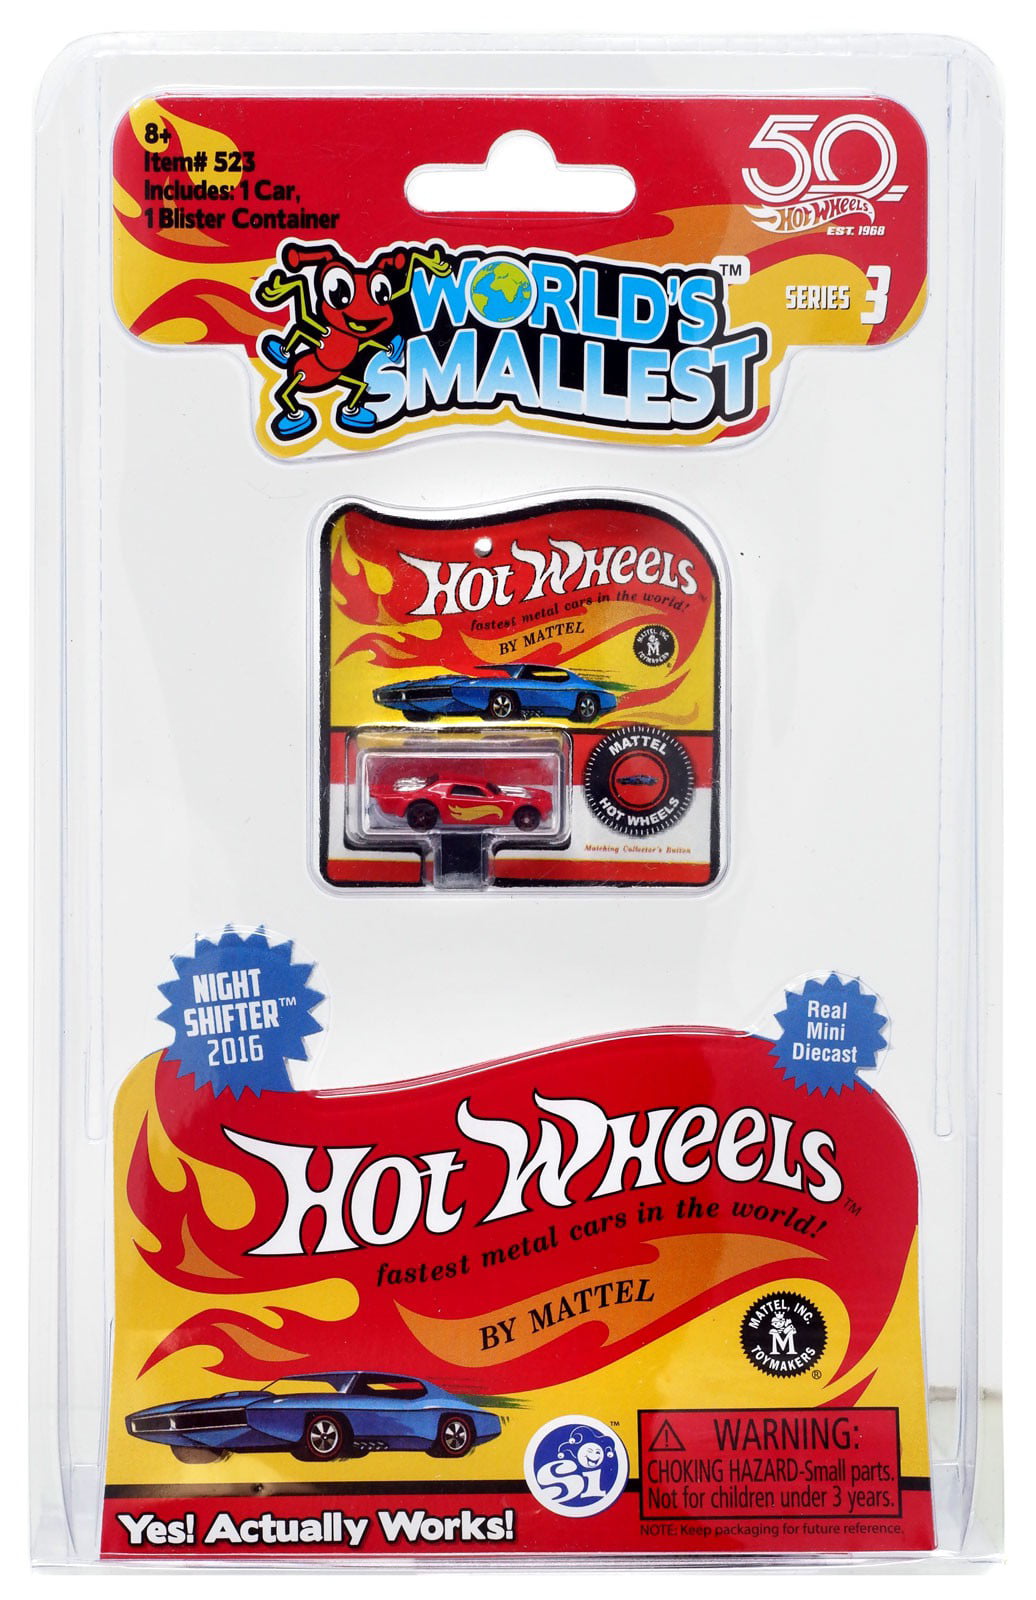 Hot Wheels Worlds Smallest Mini Drag Race Action Set Mattel 7f2uza1 for sale online 